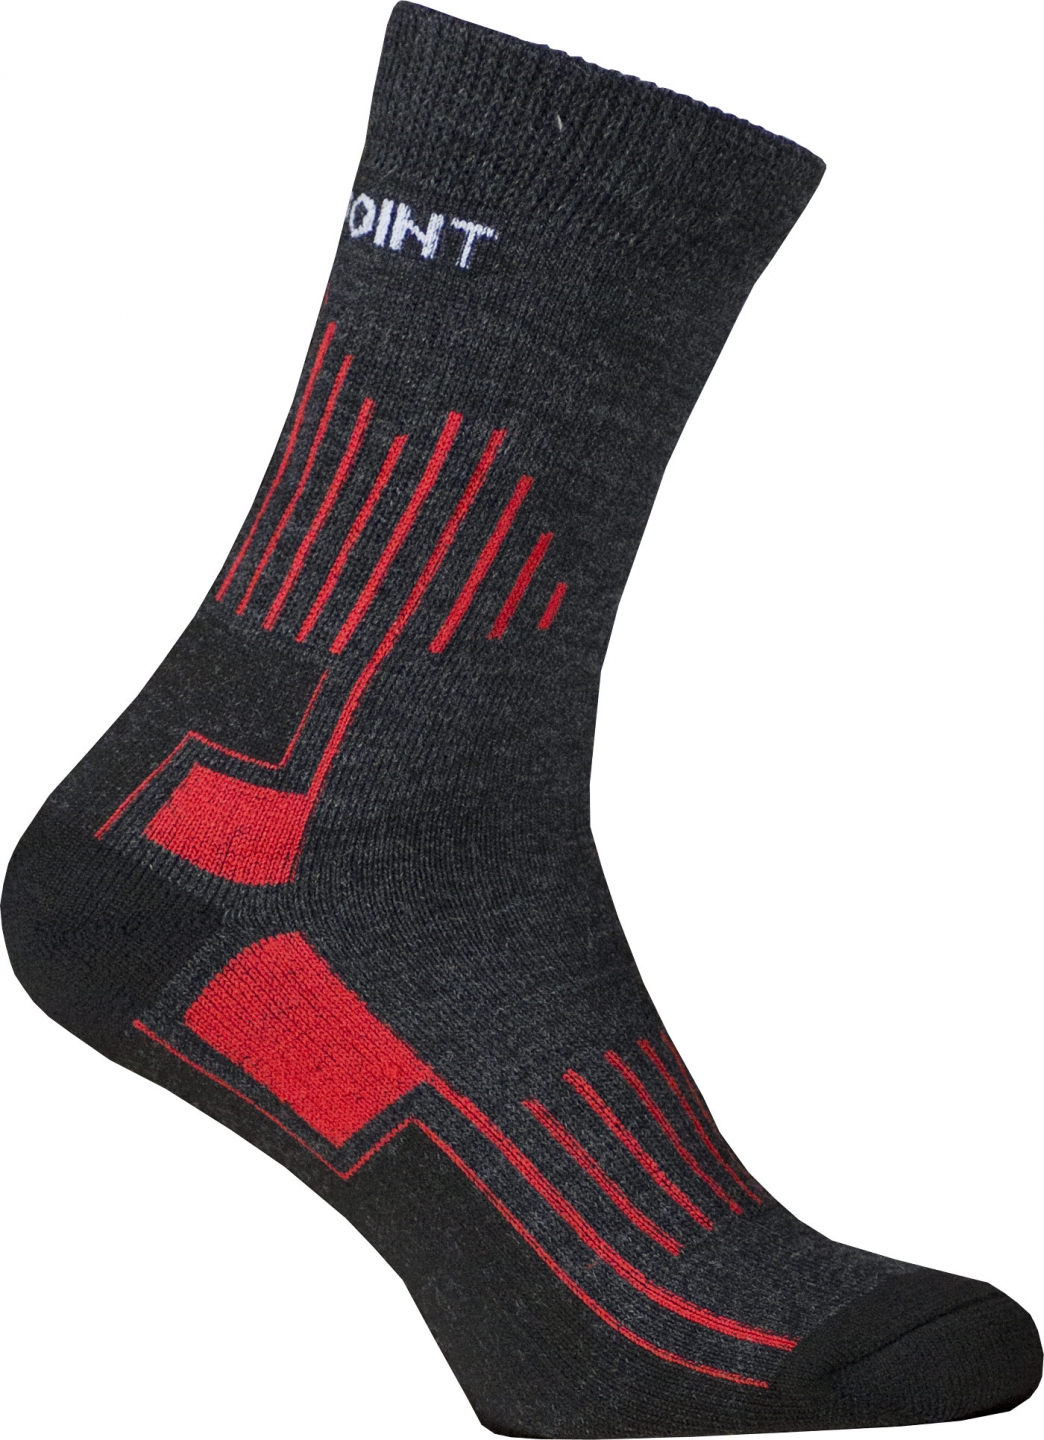 Ponožky High Point Lord 2.0 Merino Velikost: 35 - 38